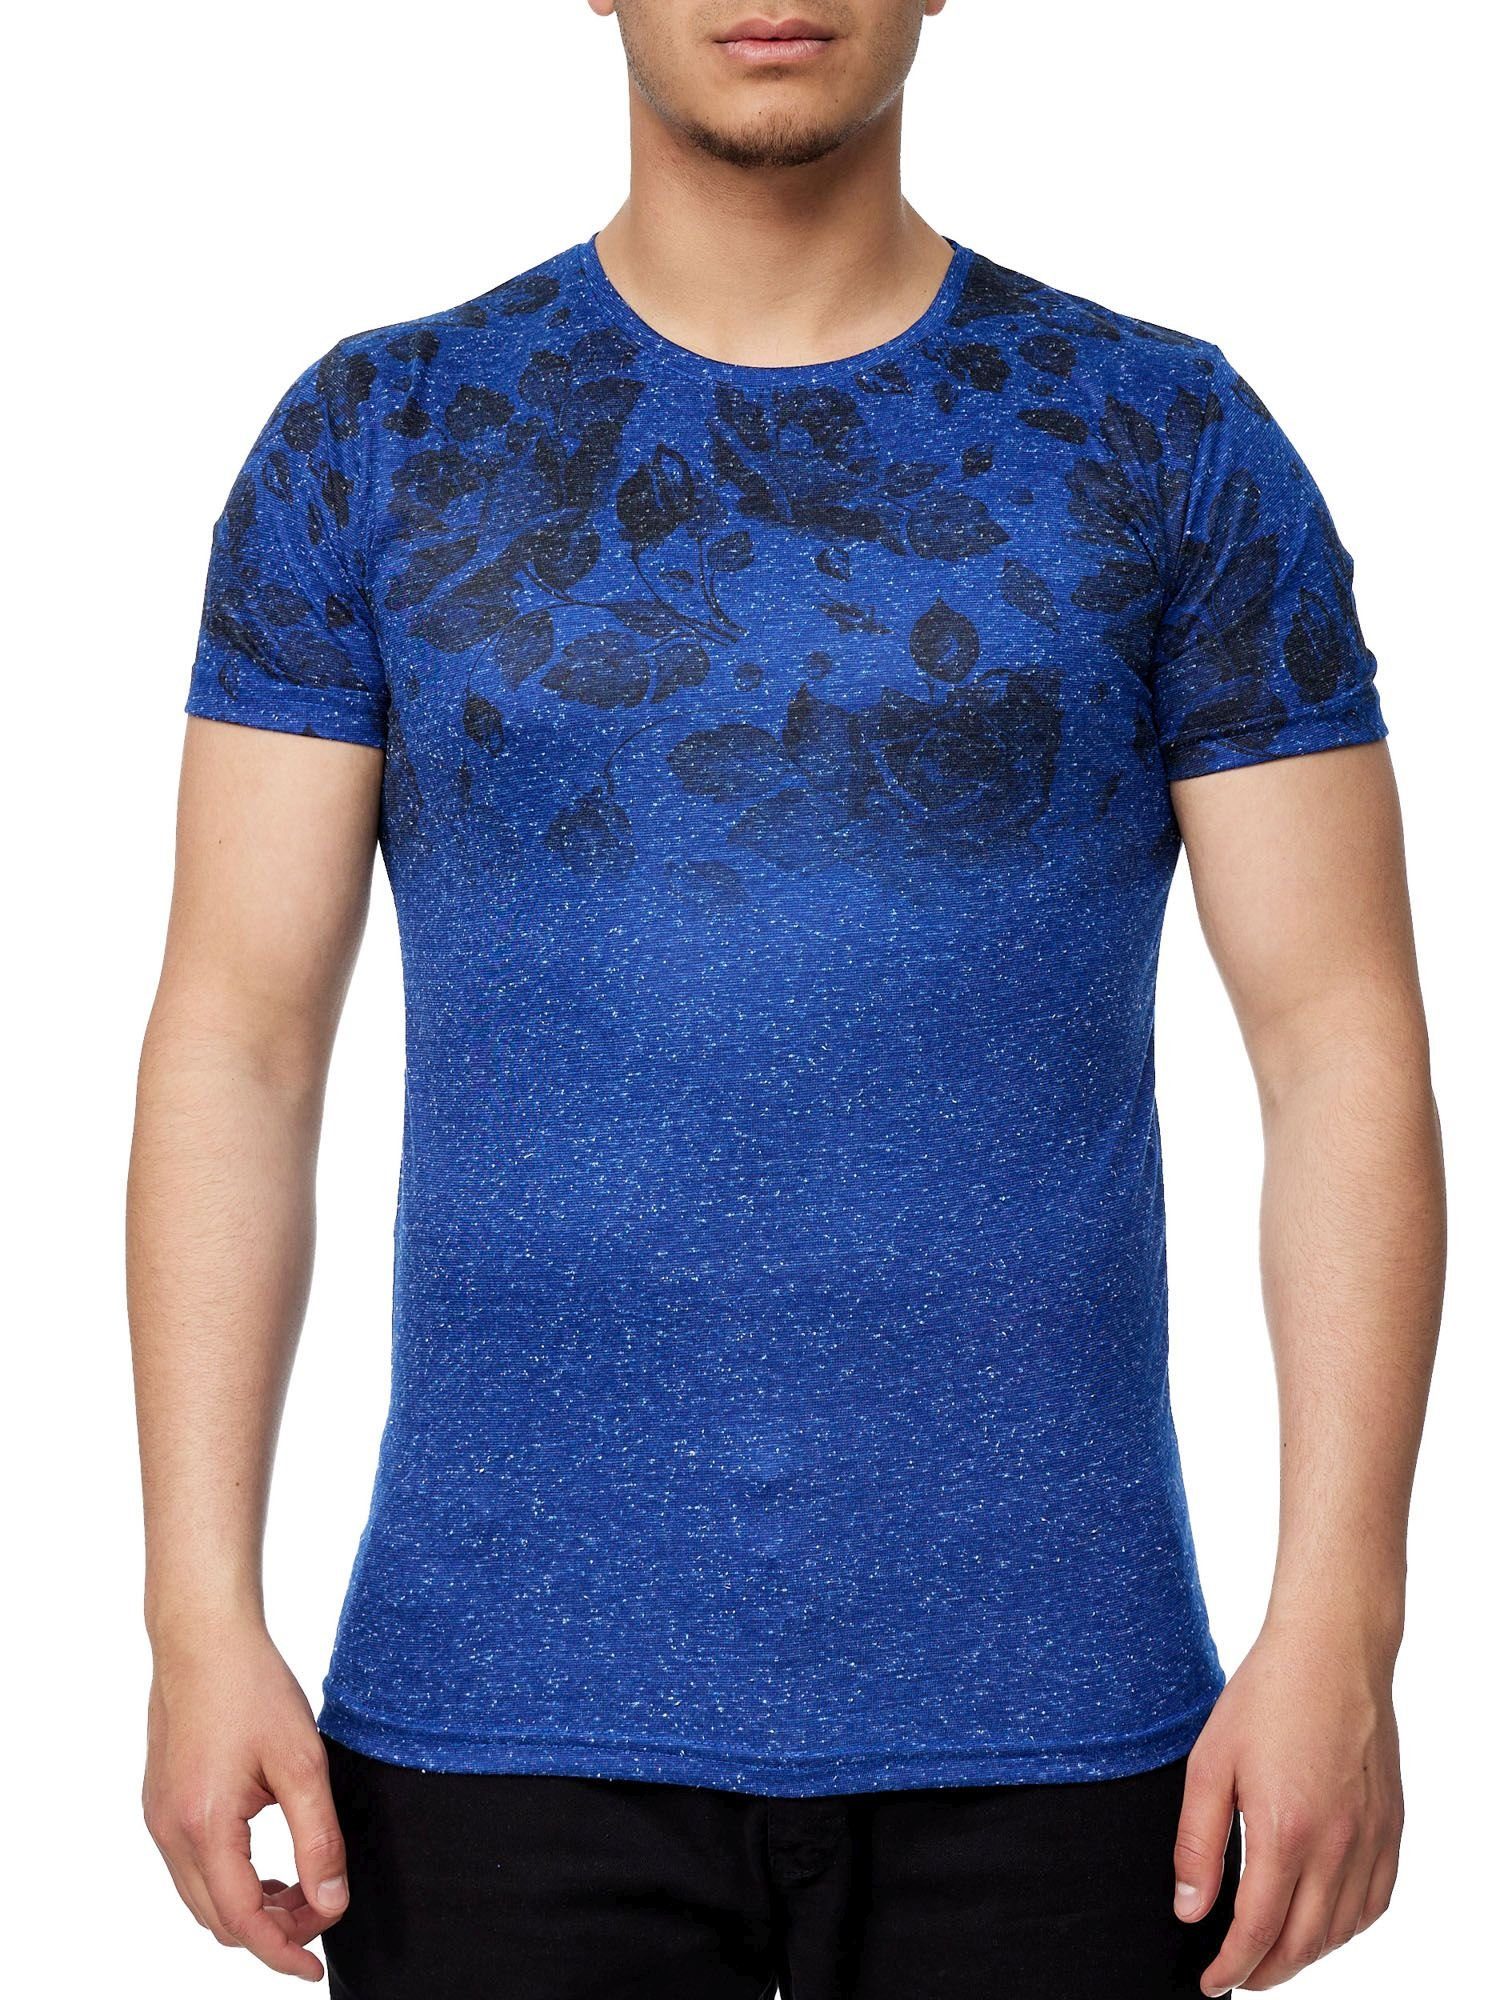 John Kayna T-Shirt John Kayna T Shirt Herren Tshirt Tee T-Shirt für Männer Polo Poloshirt Fitness Freizeit Casual Blau